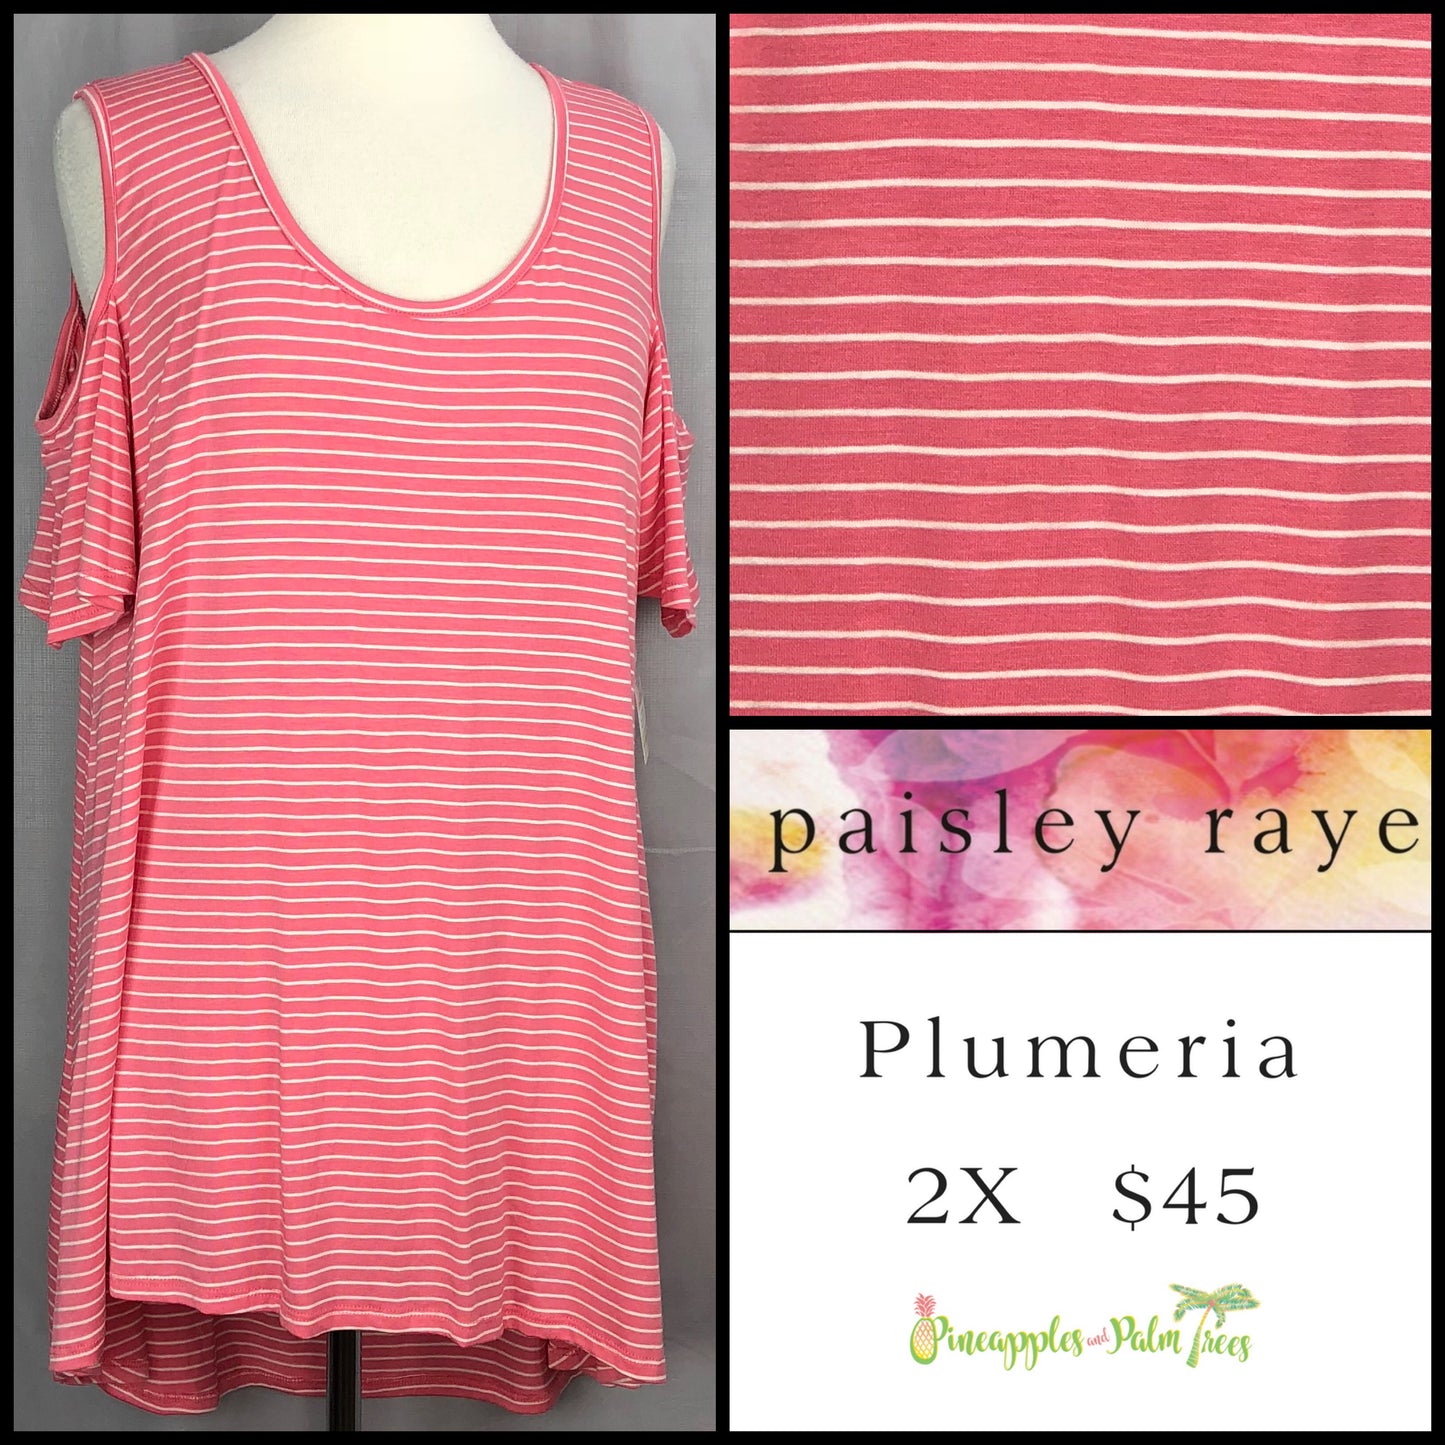 Top: Plumeria 2X - pink stripes